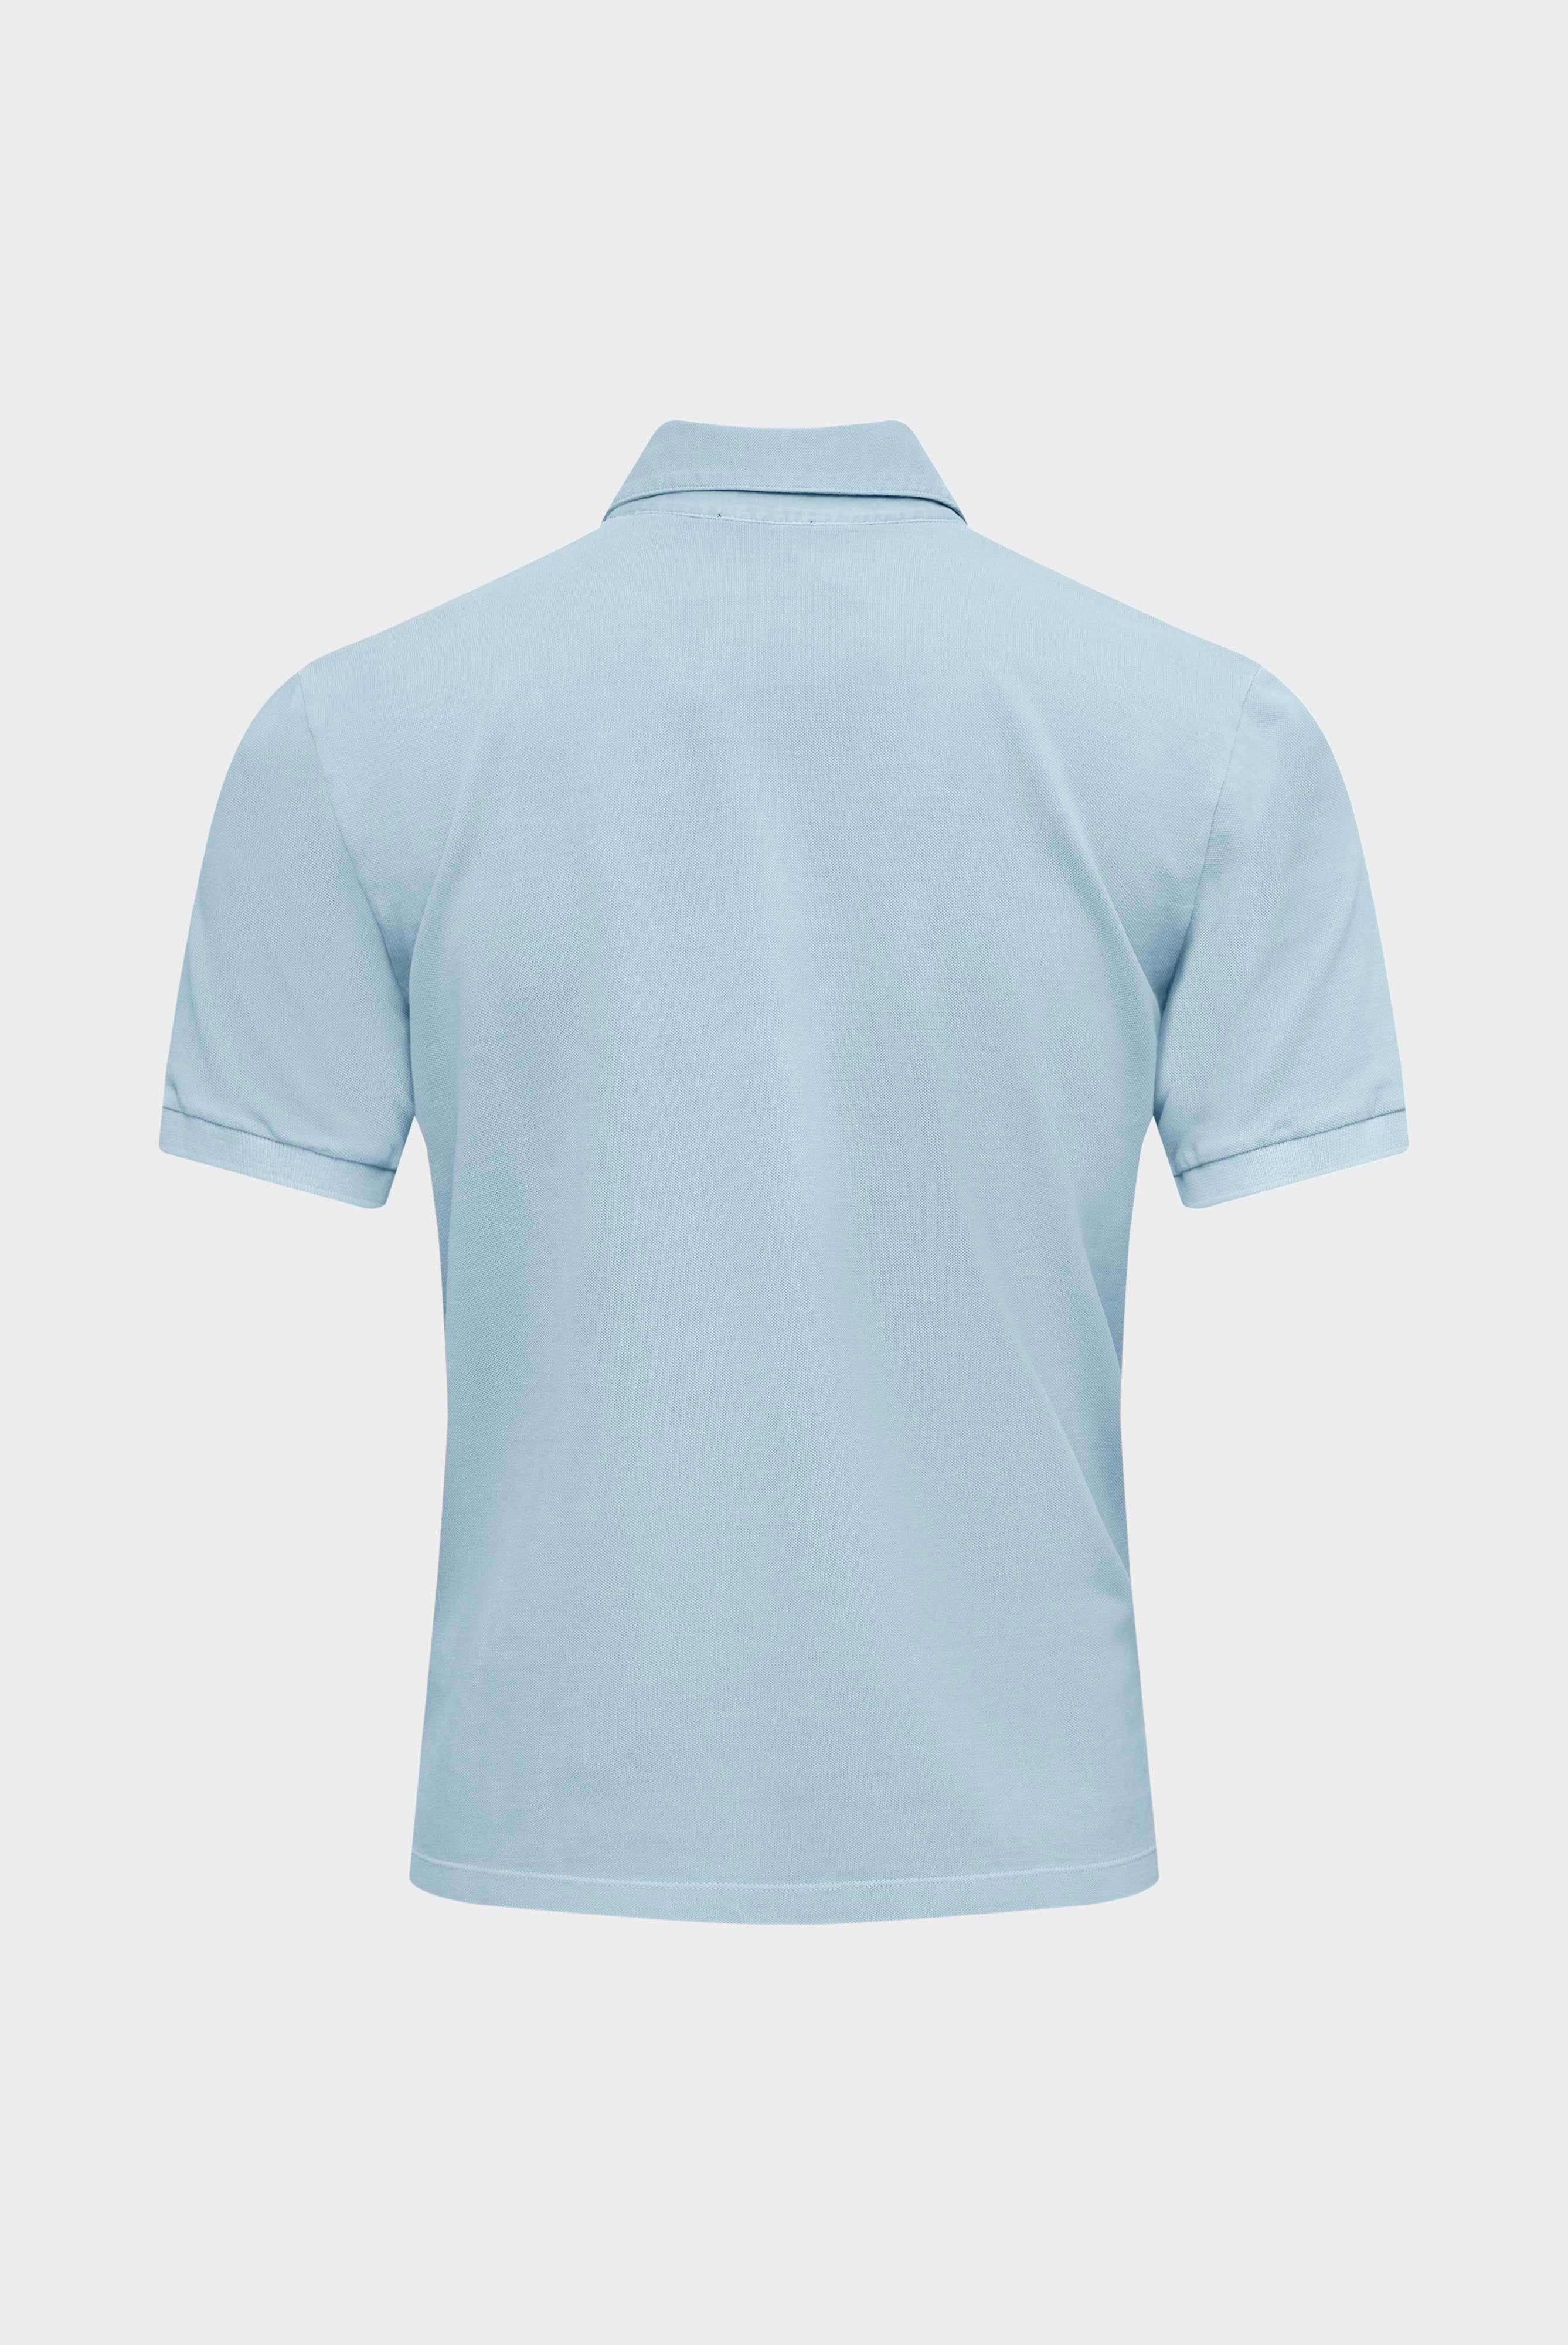 Poloshirts+Garment dyed Piqué Poloshirt+20.1650..Z20047.720.S